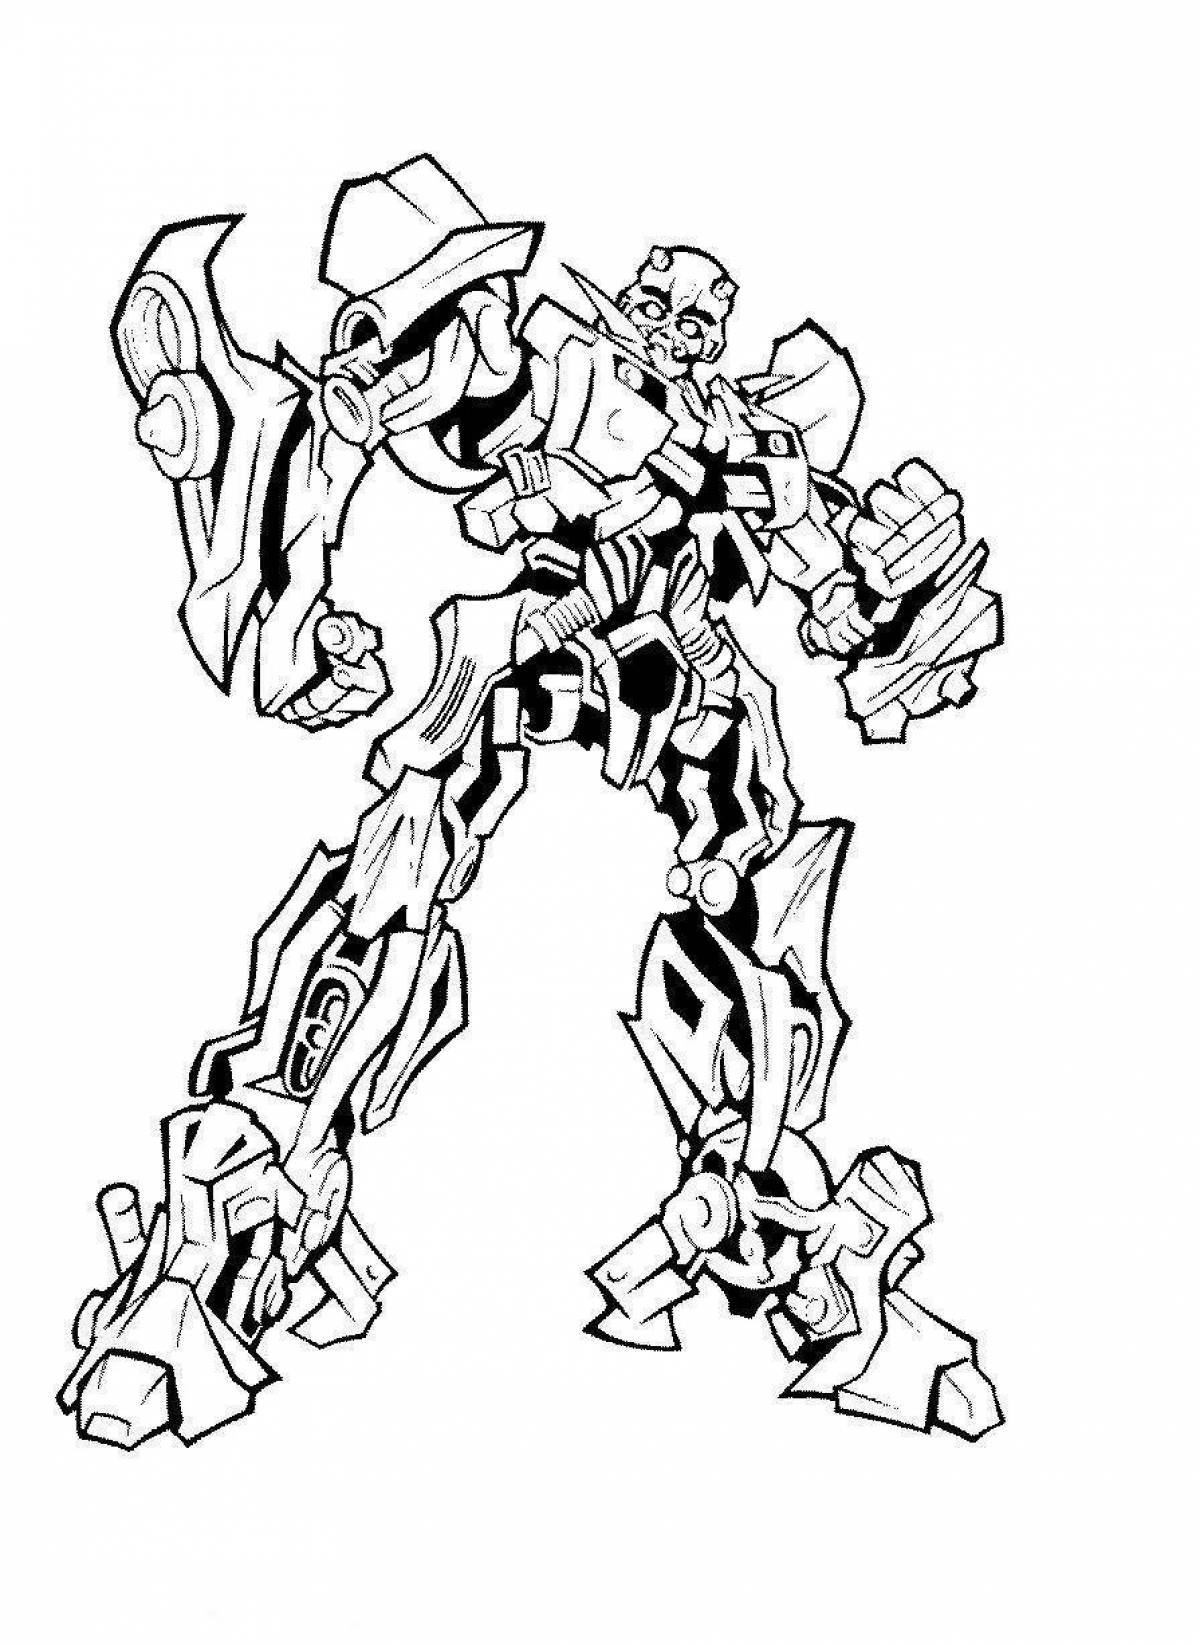 Impressive transformers ratchet coloring page